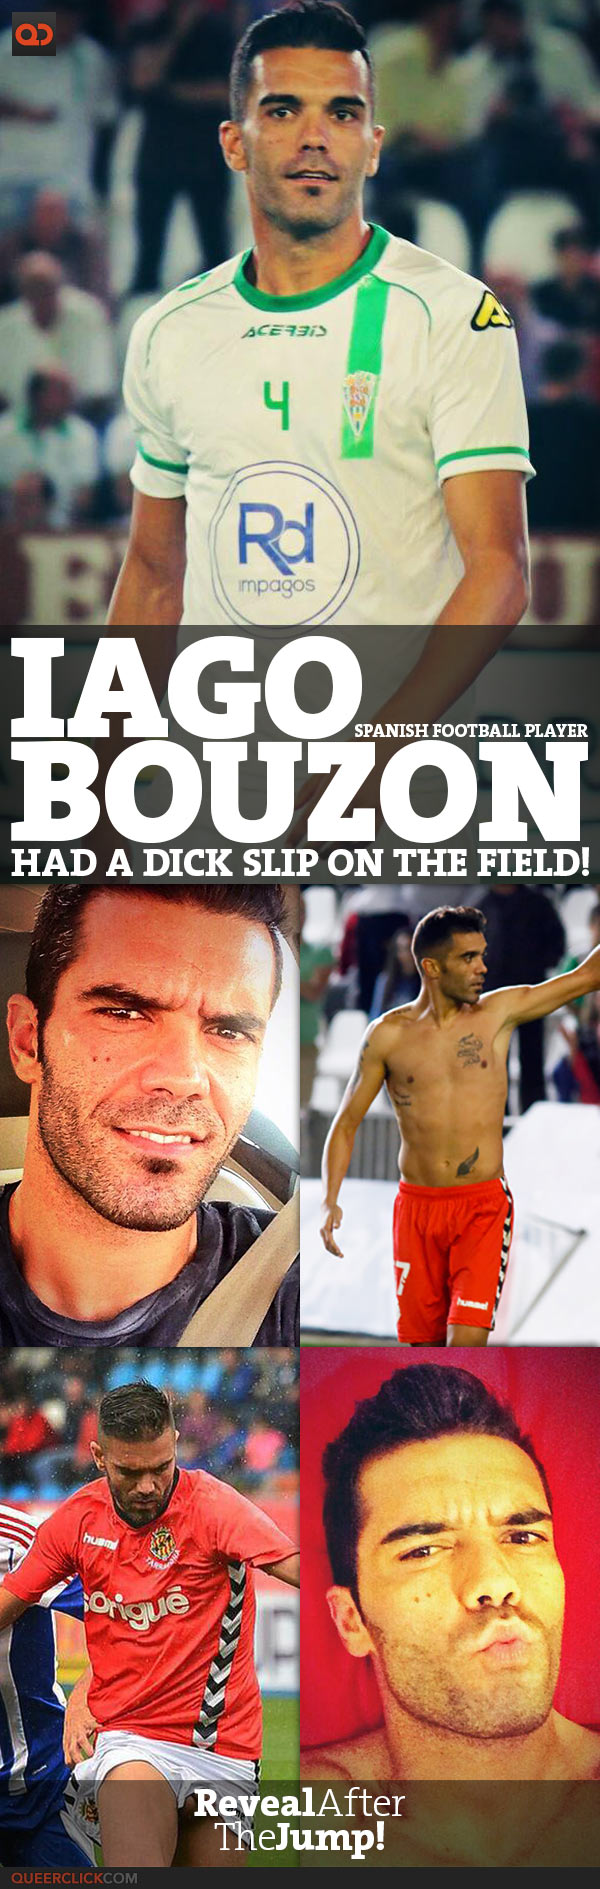 Iago Bouzonis, Spanish Football Player, Had A Dick Slip On The Field!